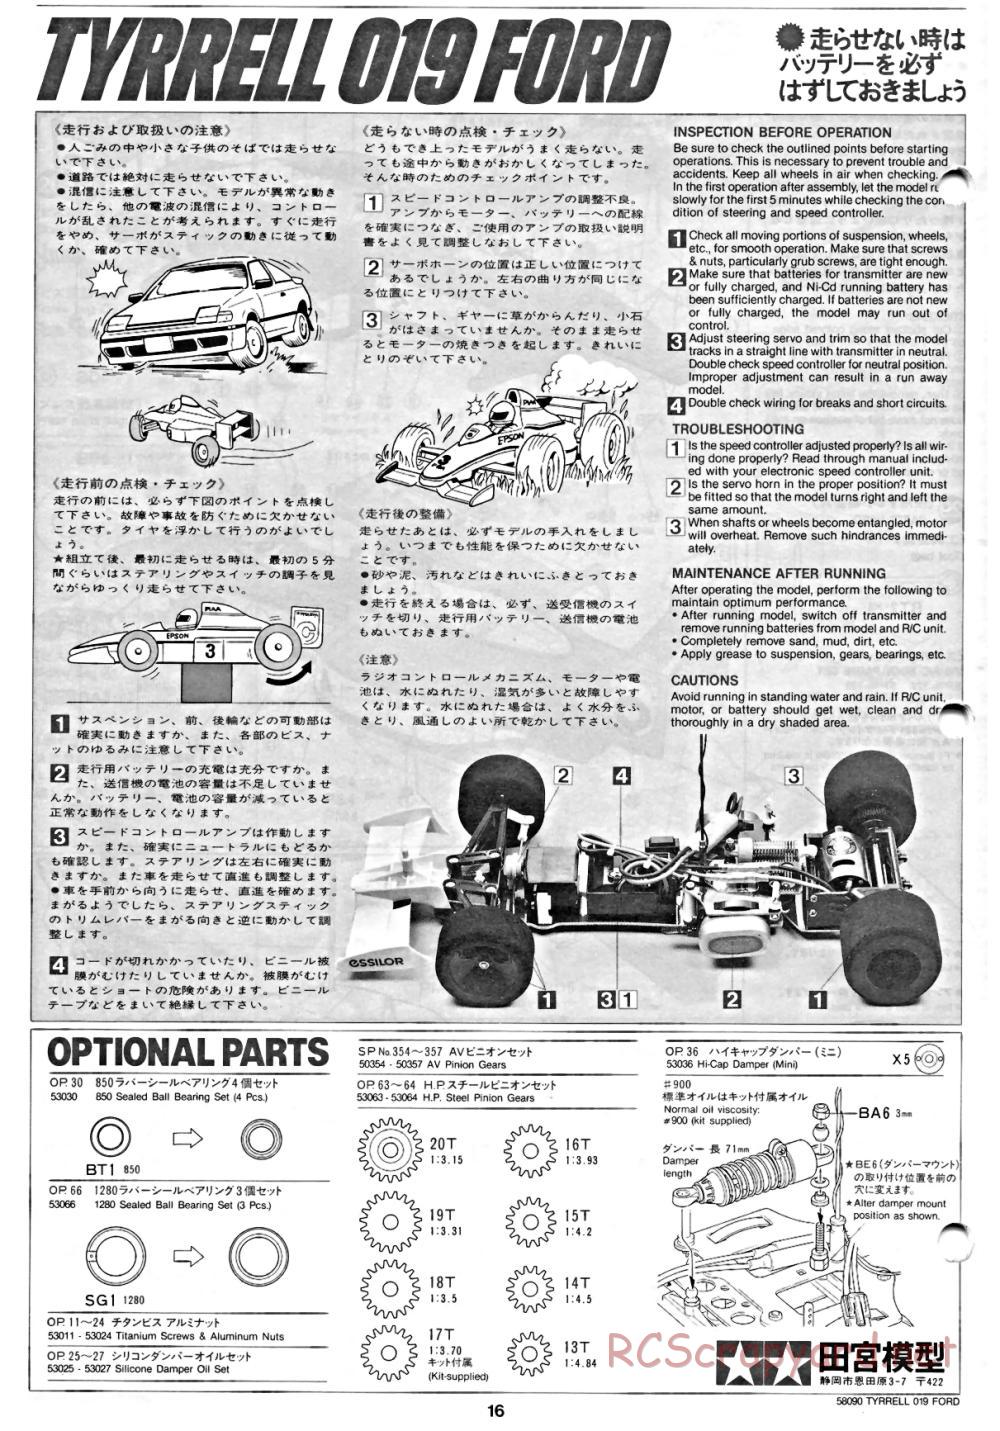 Tamiya - Tyrrell 019 Ford - 58090 - Manual - Page 16